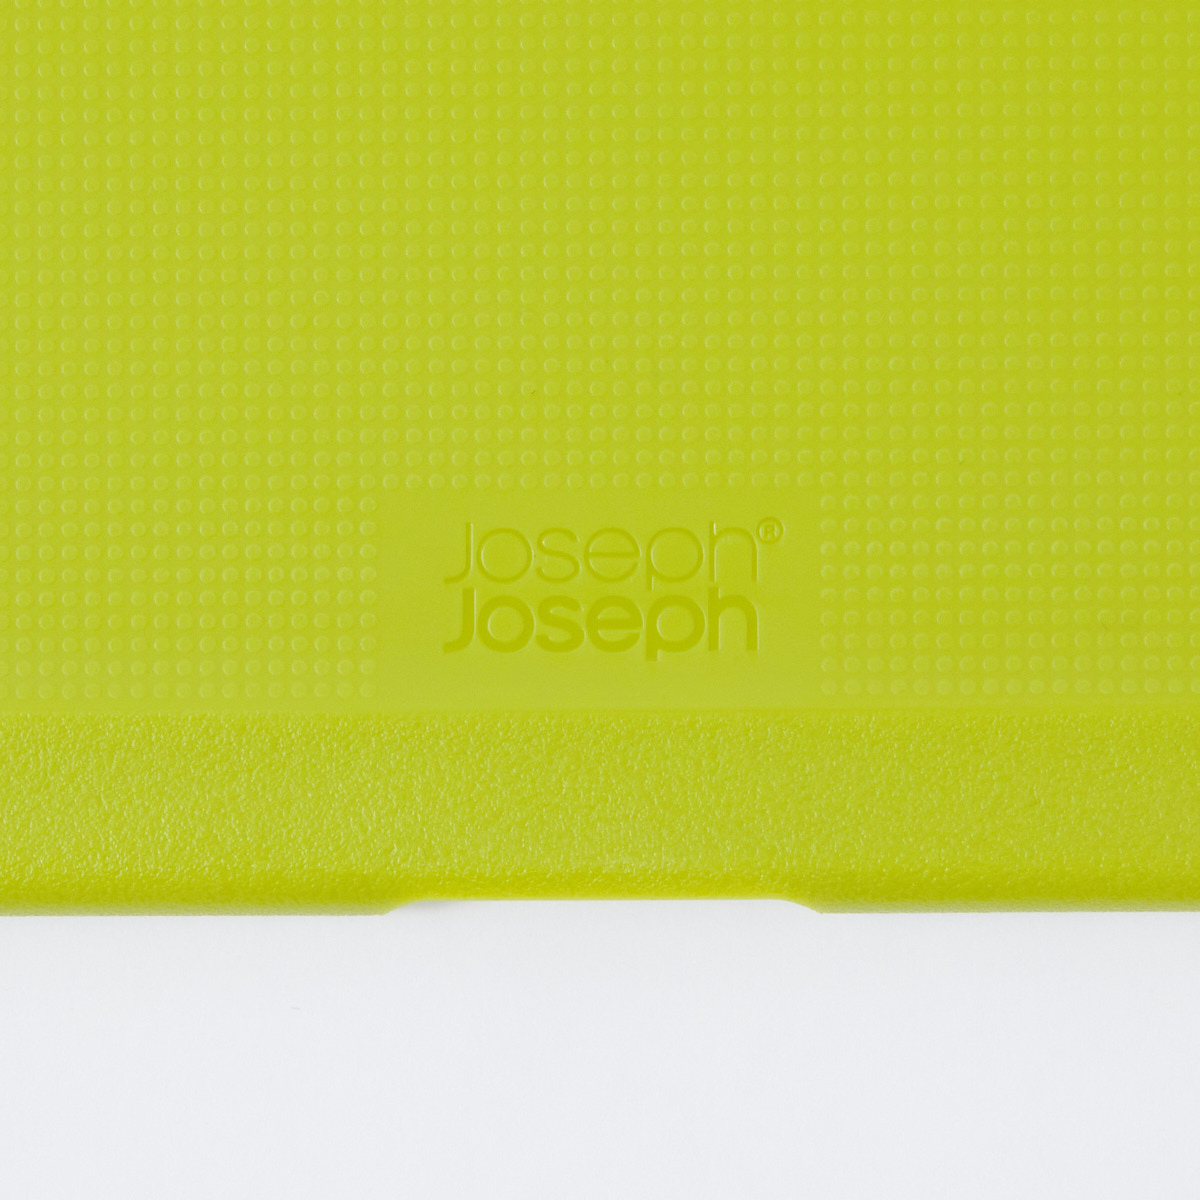 【JosephJoseph】ネストボード ラージ 3ピースセット